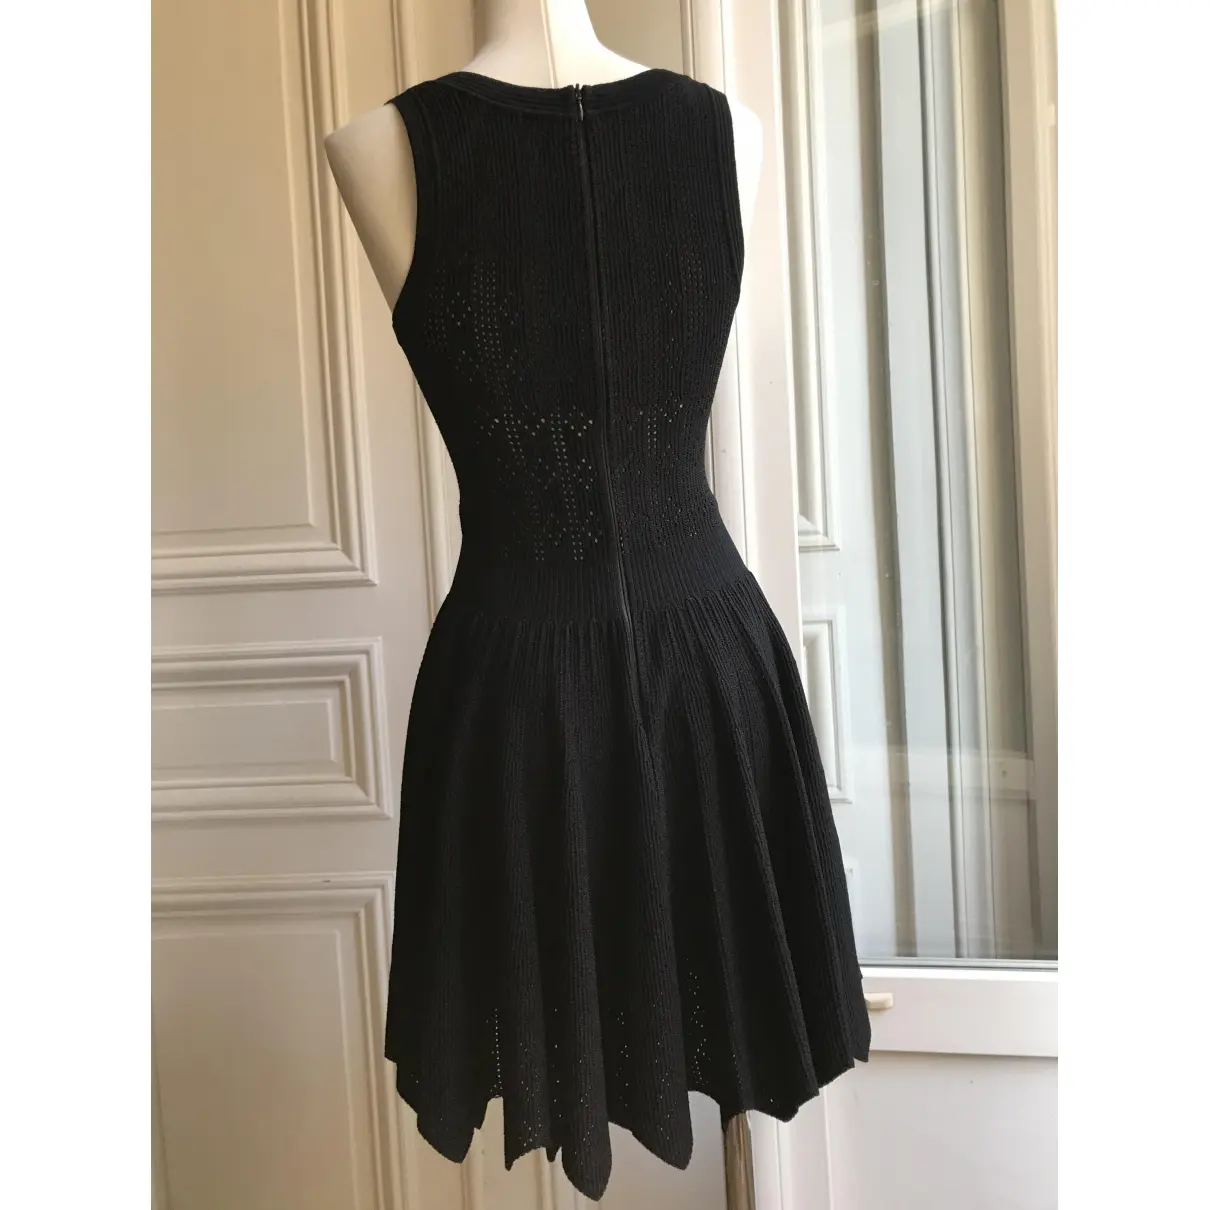 Buy Alaïa Dress online